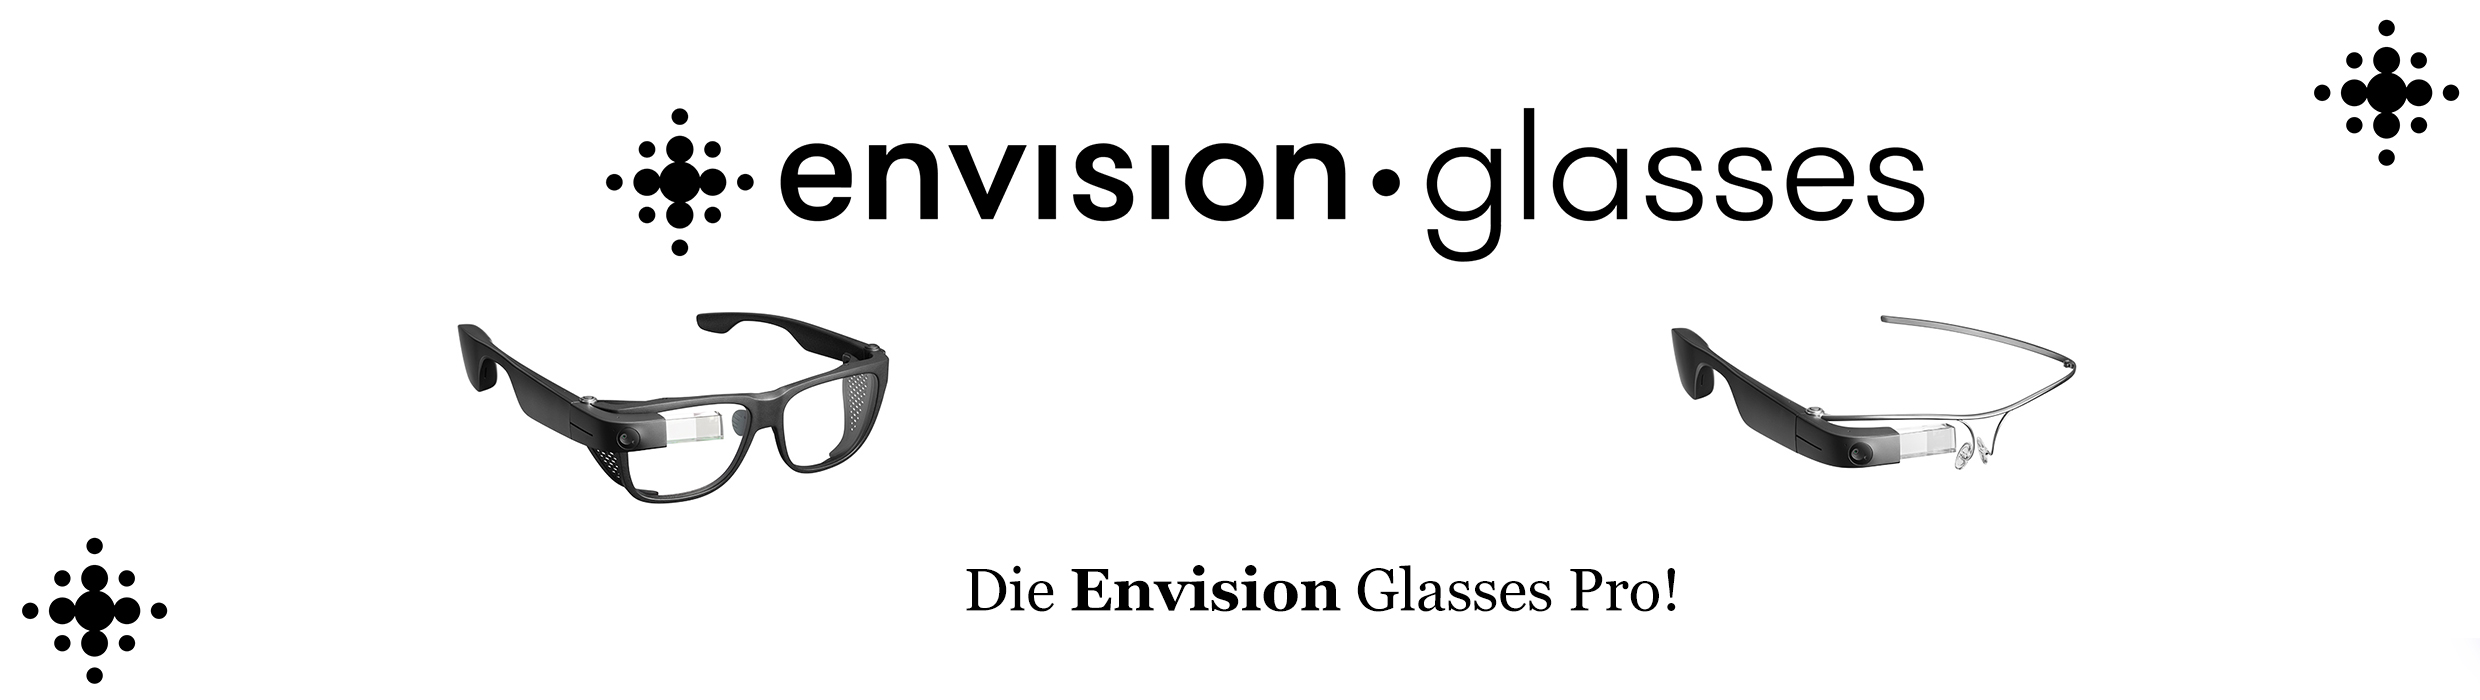 Die Envision Glasses Pro!